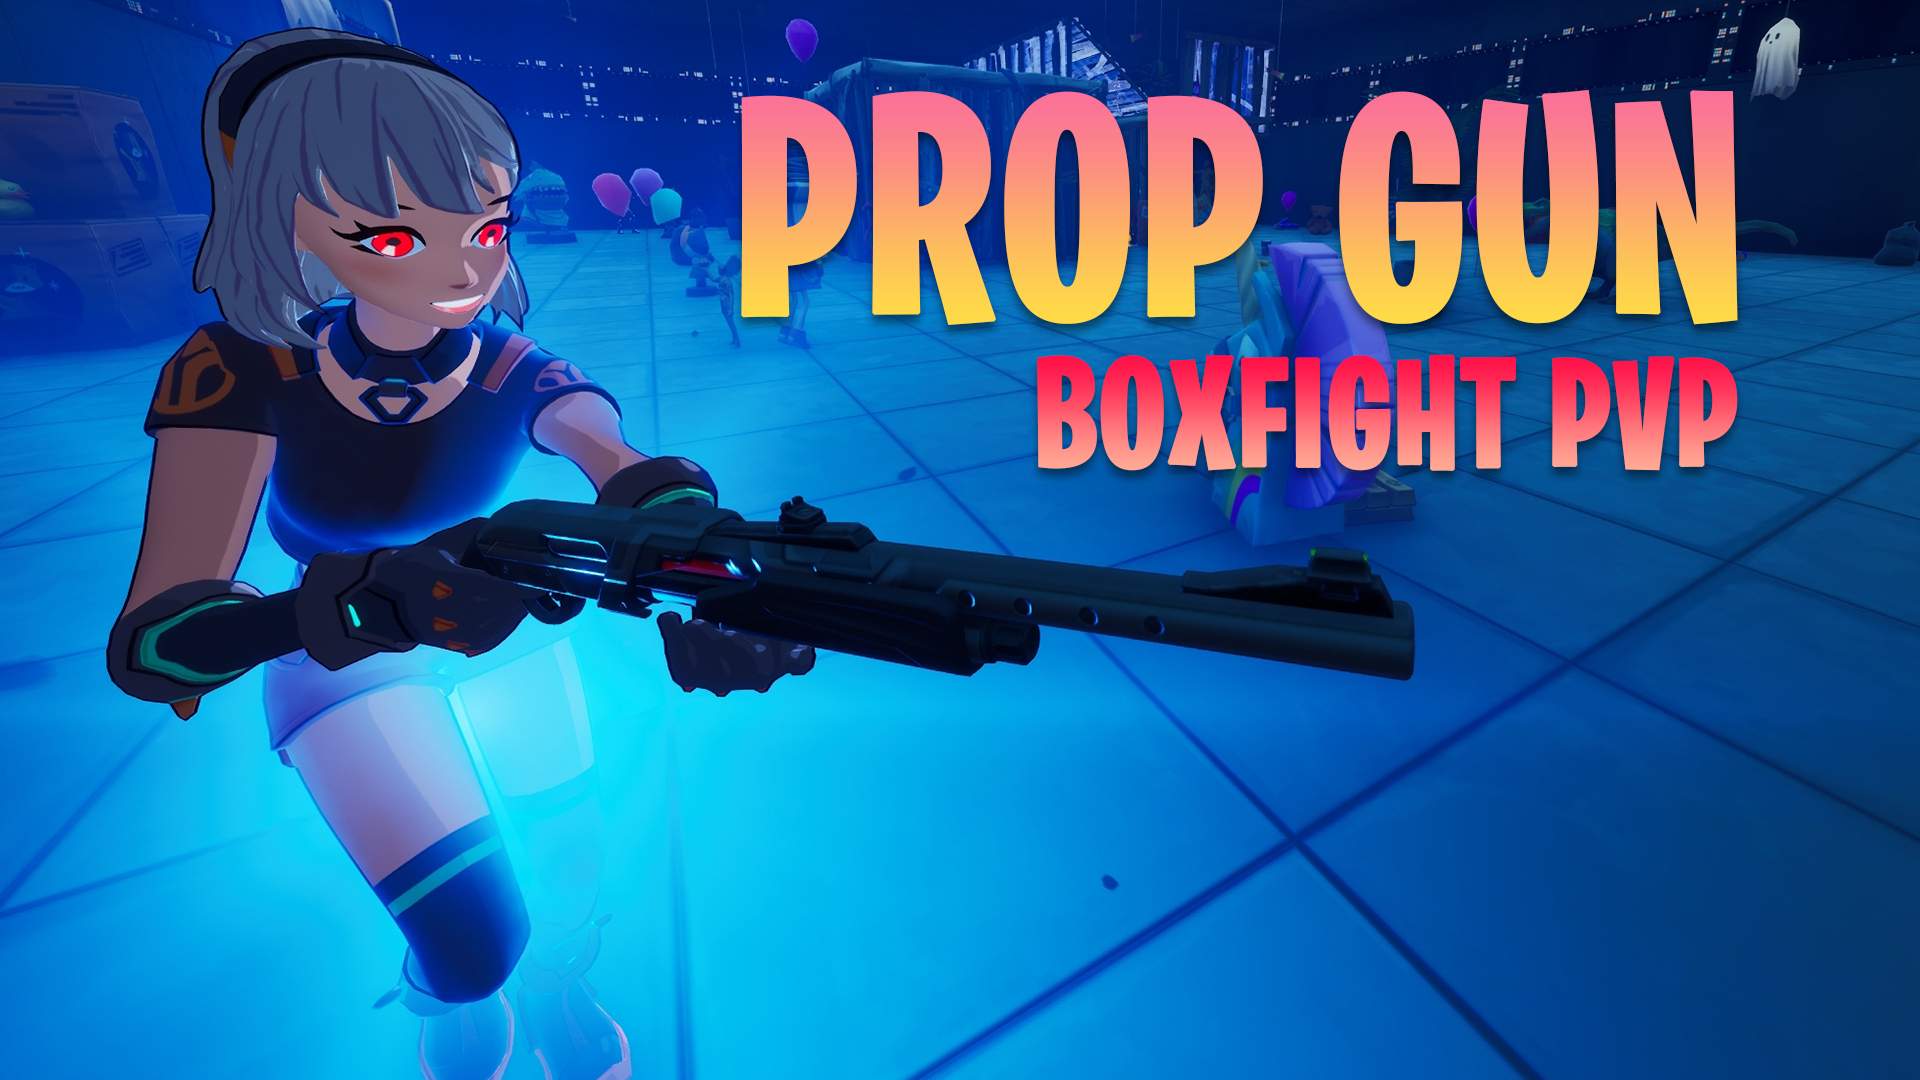 PROP GUN PVP BOXFIGHT